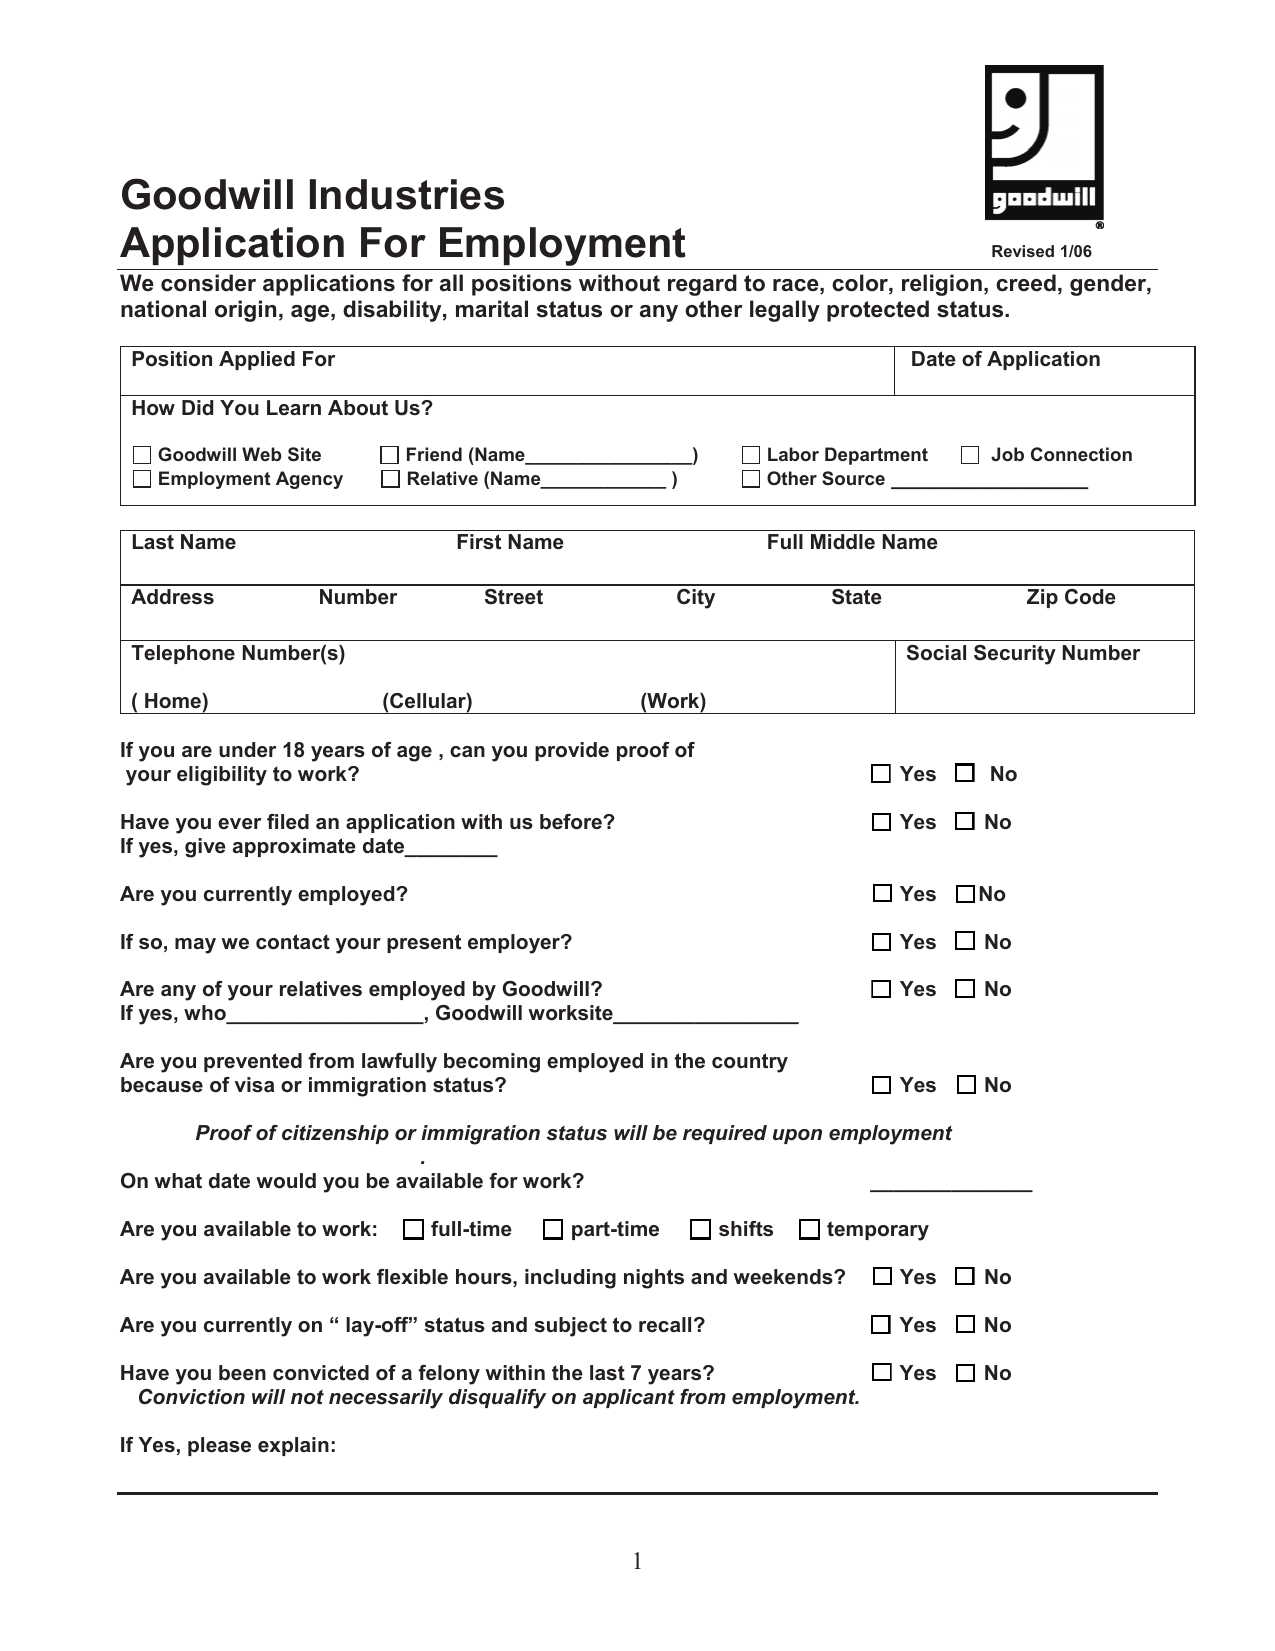 Download Goodwill Job Application Form – Careers | PDF | FreeDownloads.net